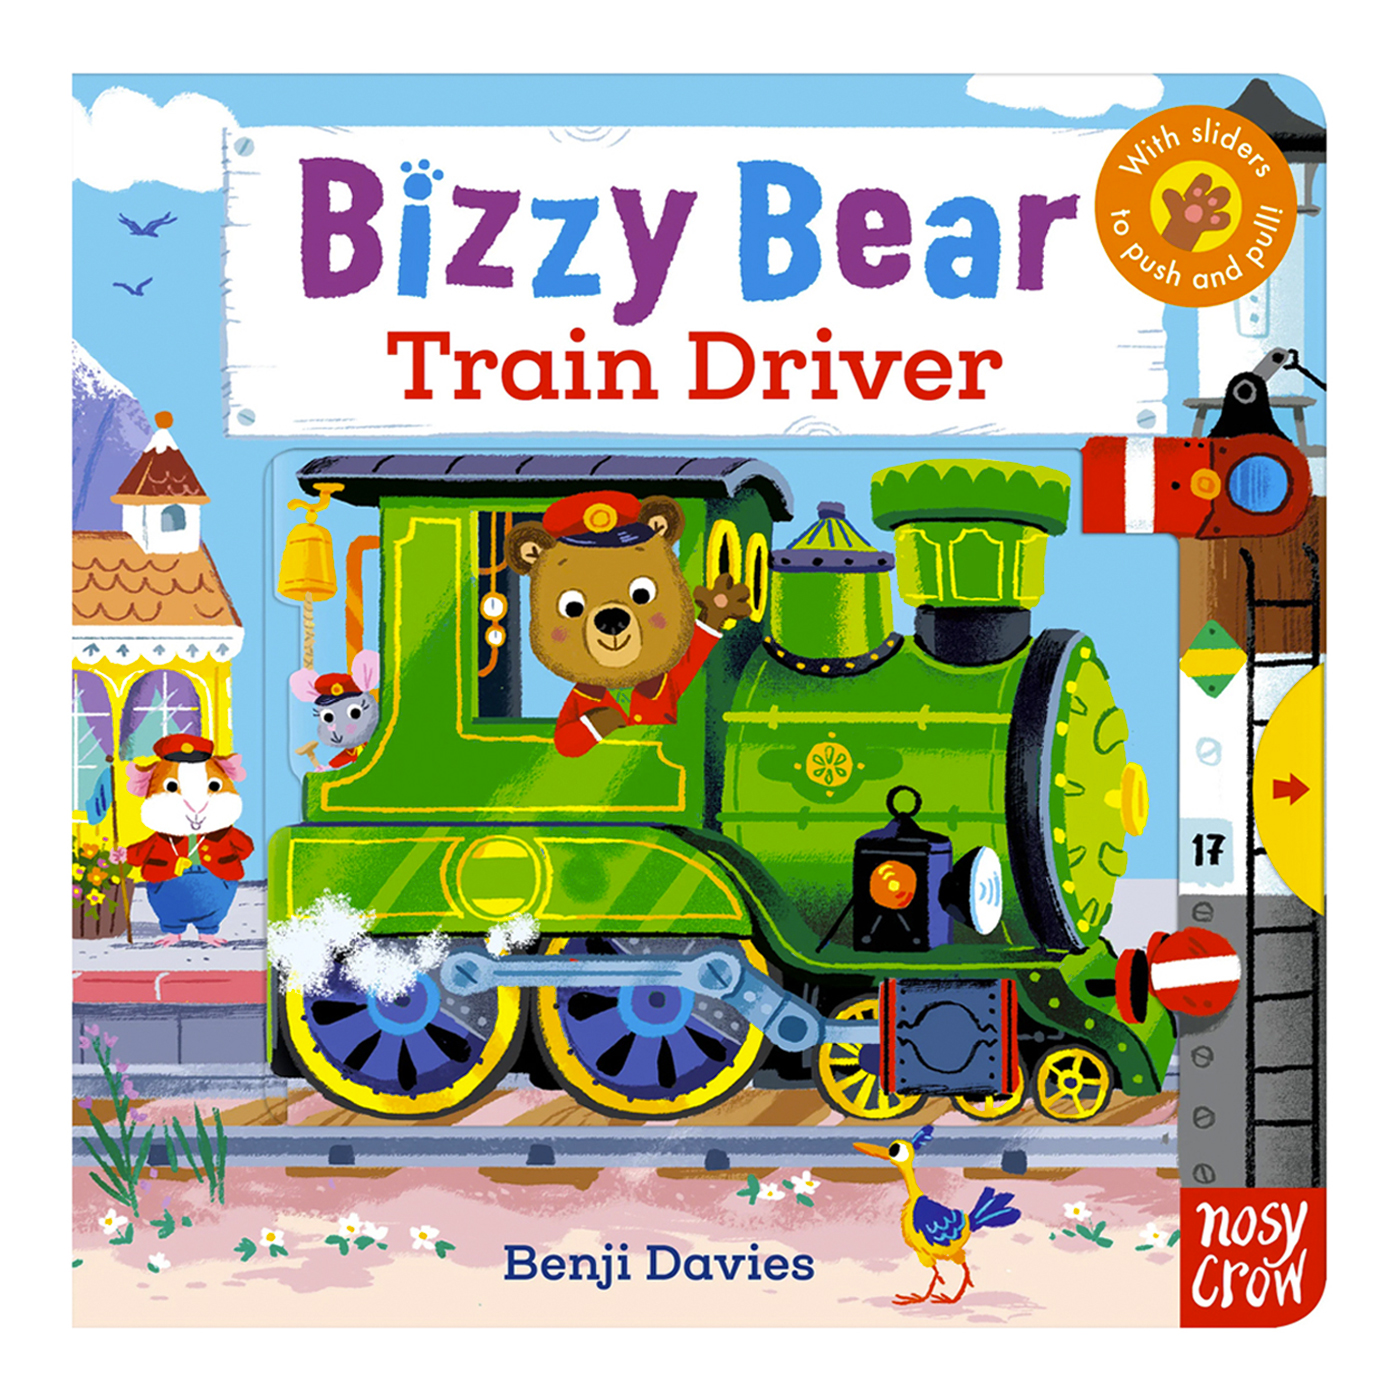  Bizzy Bear: Train Driver